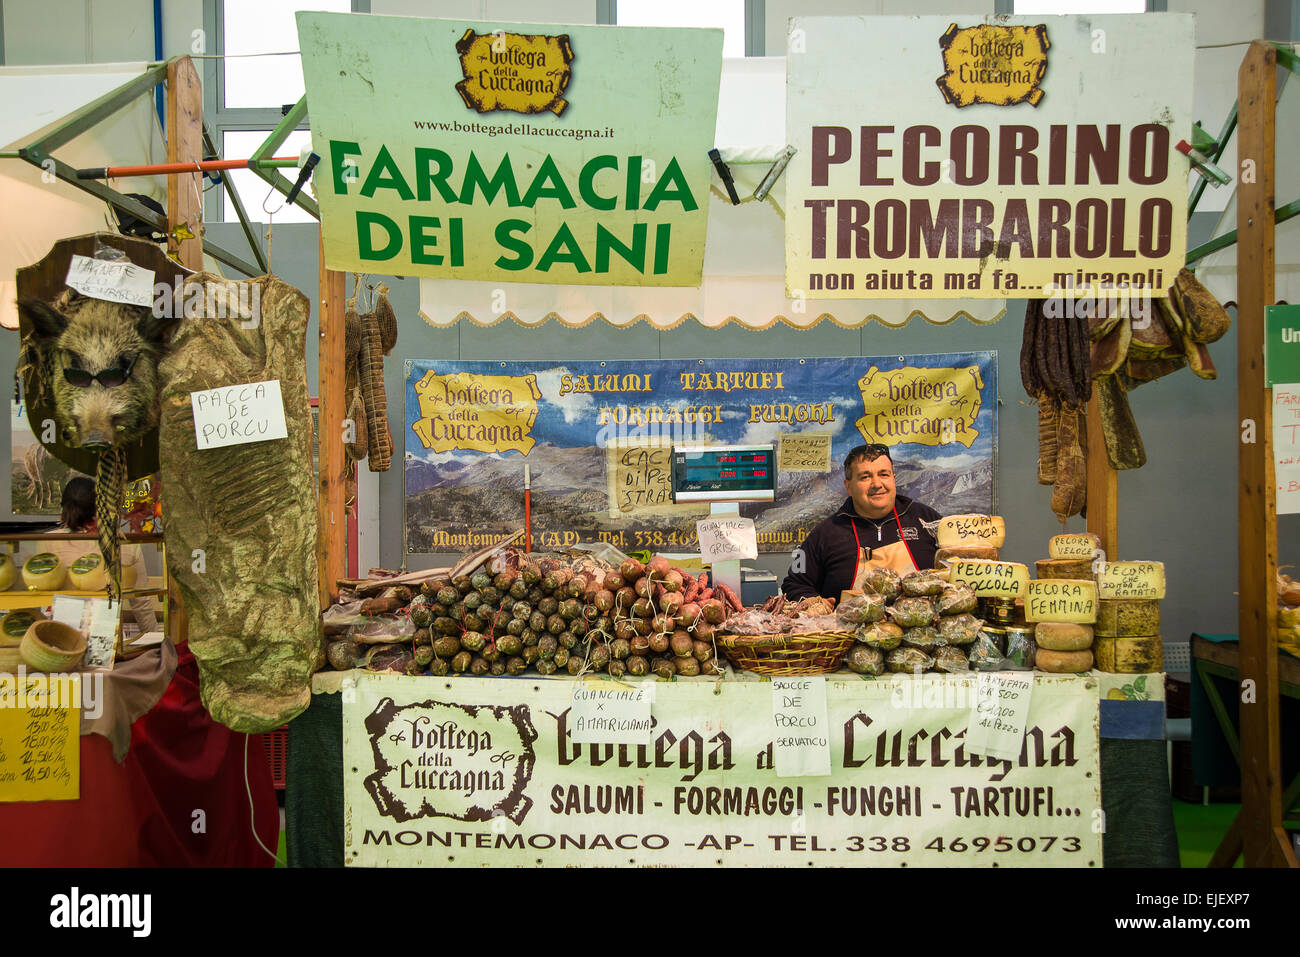 Marche, Fermo, Marche Tipicità, typische 2015, Imbiss-Stand "Bottega della Cuccagna Farmacia dei Sani', Fleisch und Käse aus den Marken Stockfoto